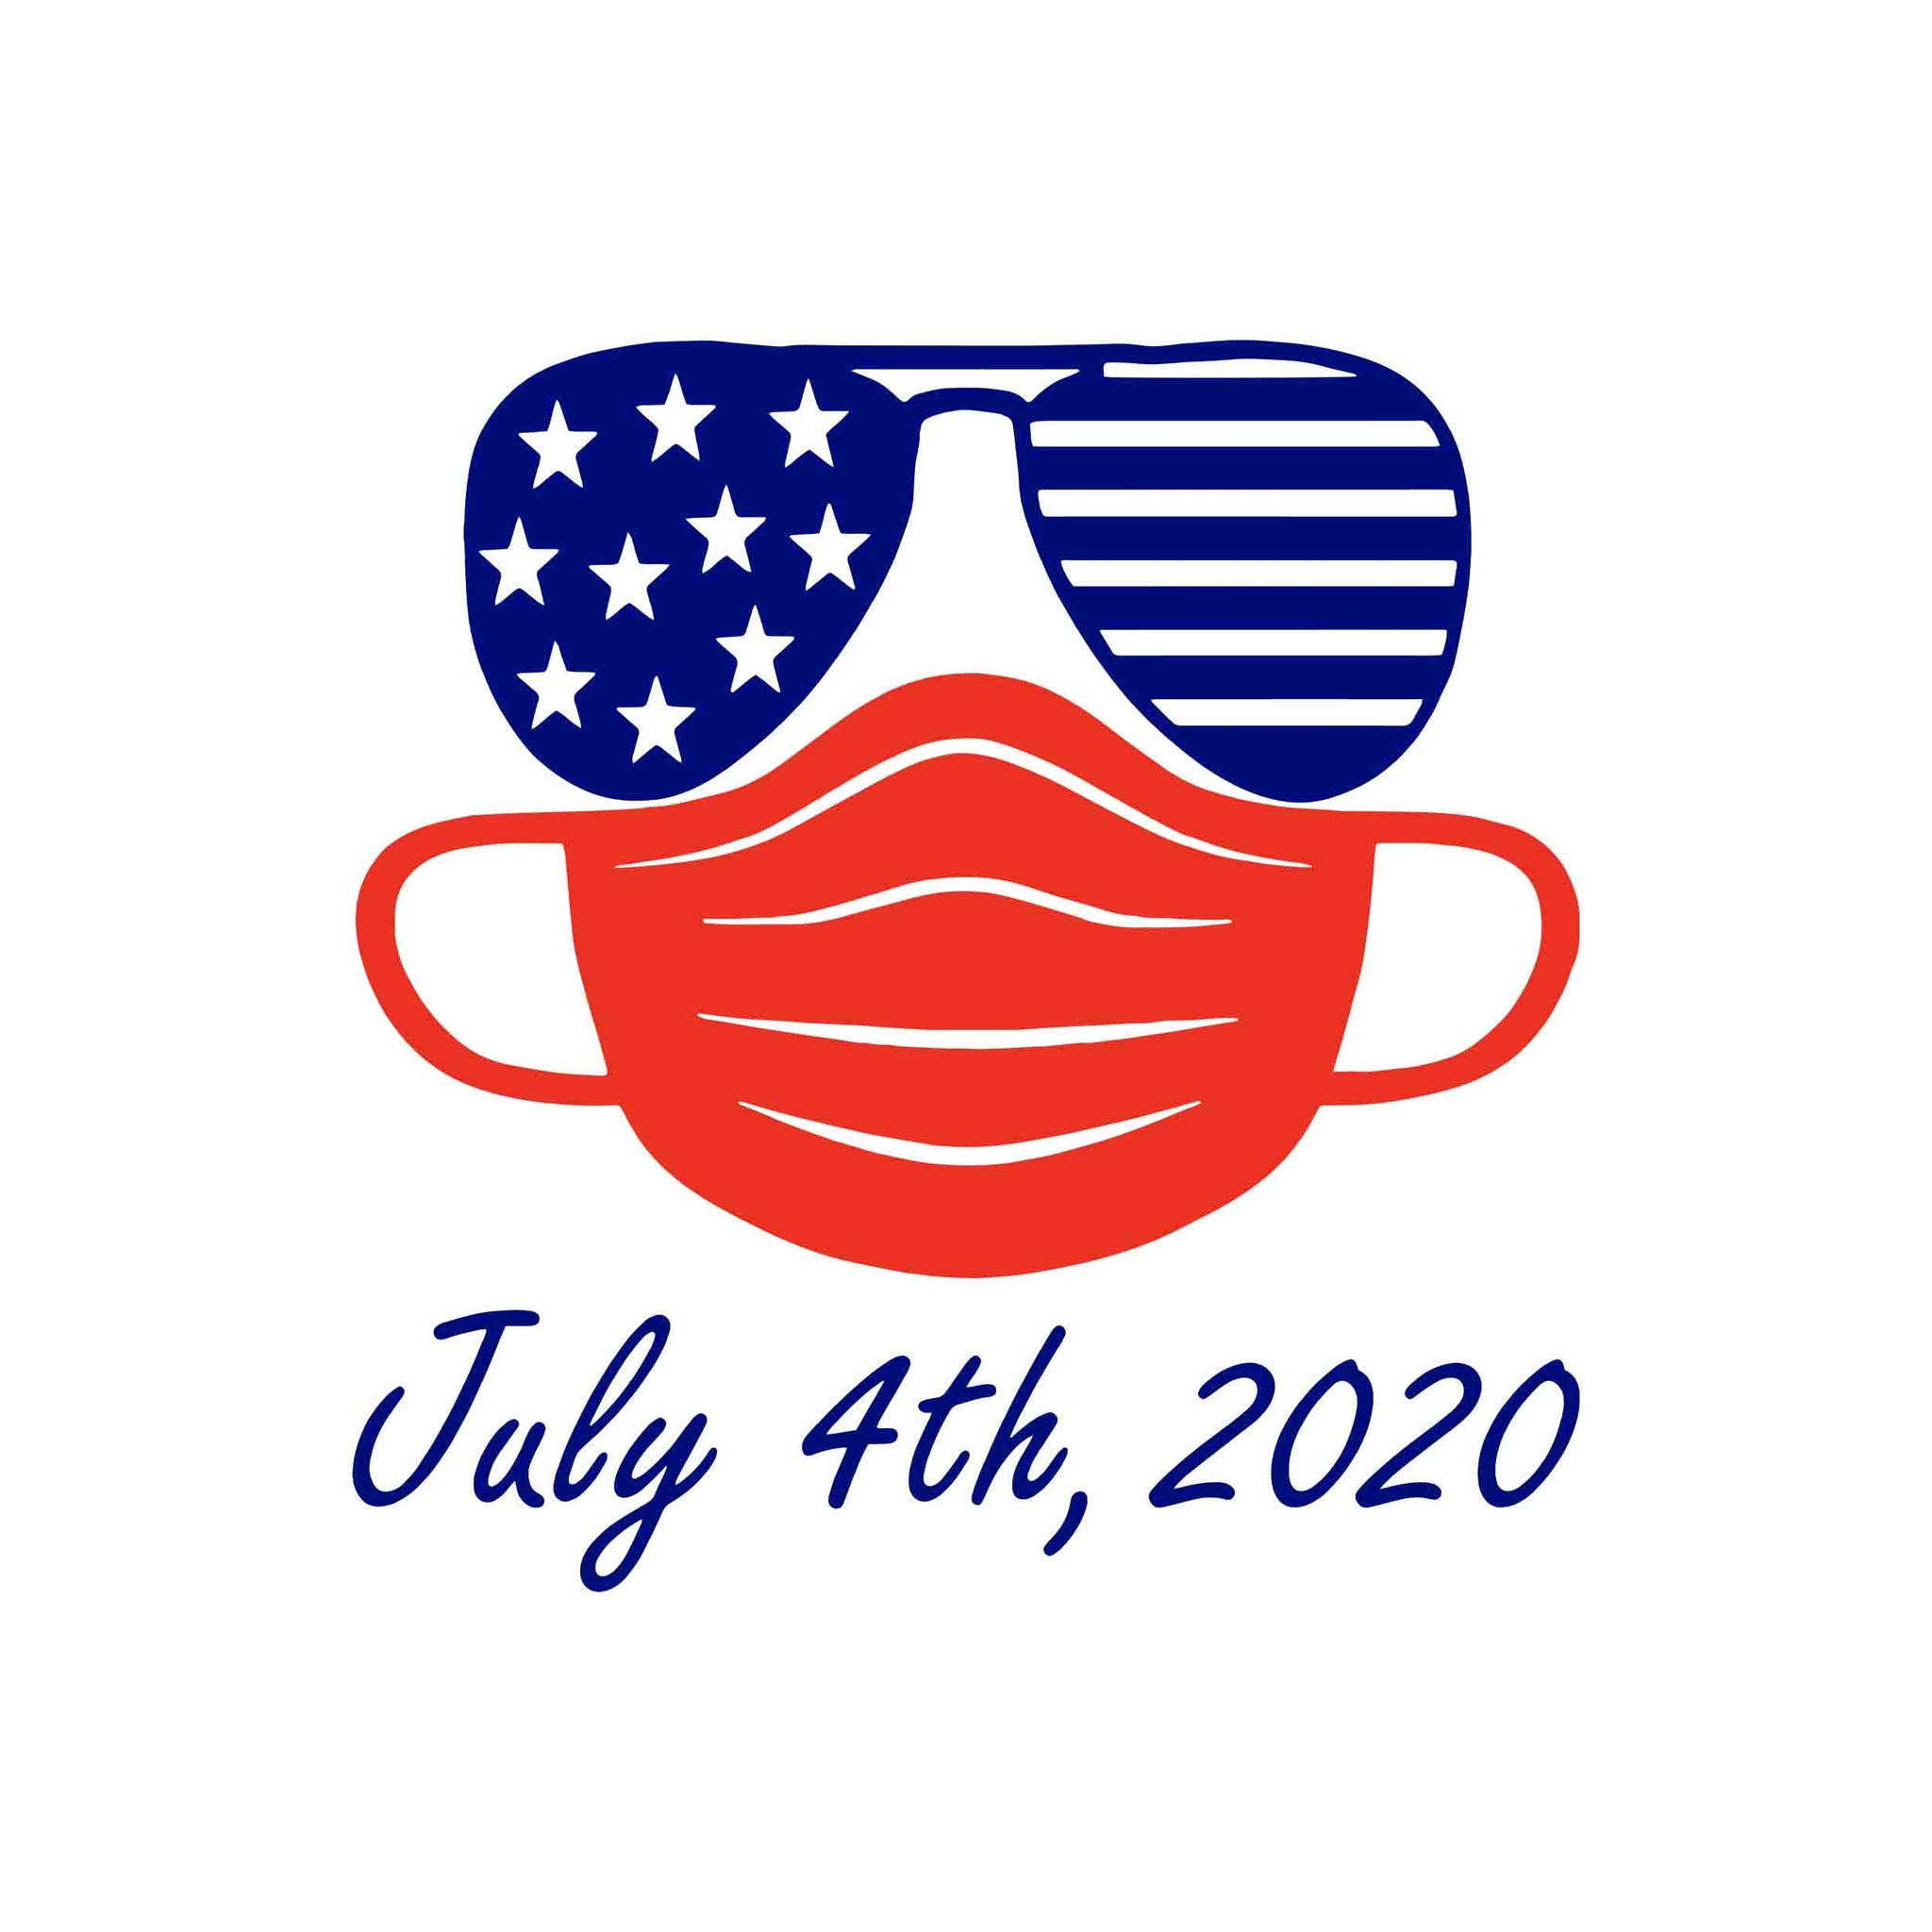 4th of july svg, july 4th 2020 svg, USA Quarantine 2020, USA Quarantine 2020 png, USA Quarantine 2020 Svg, USA Png, Stars and Stripes, 4th of July Svg, America Png